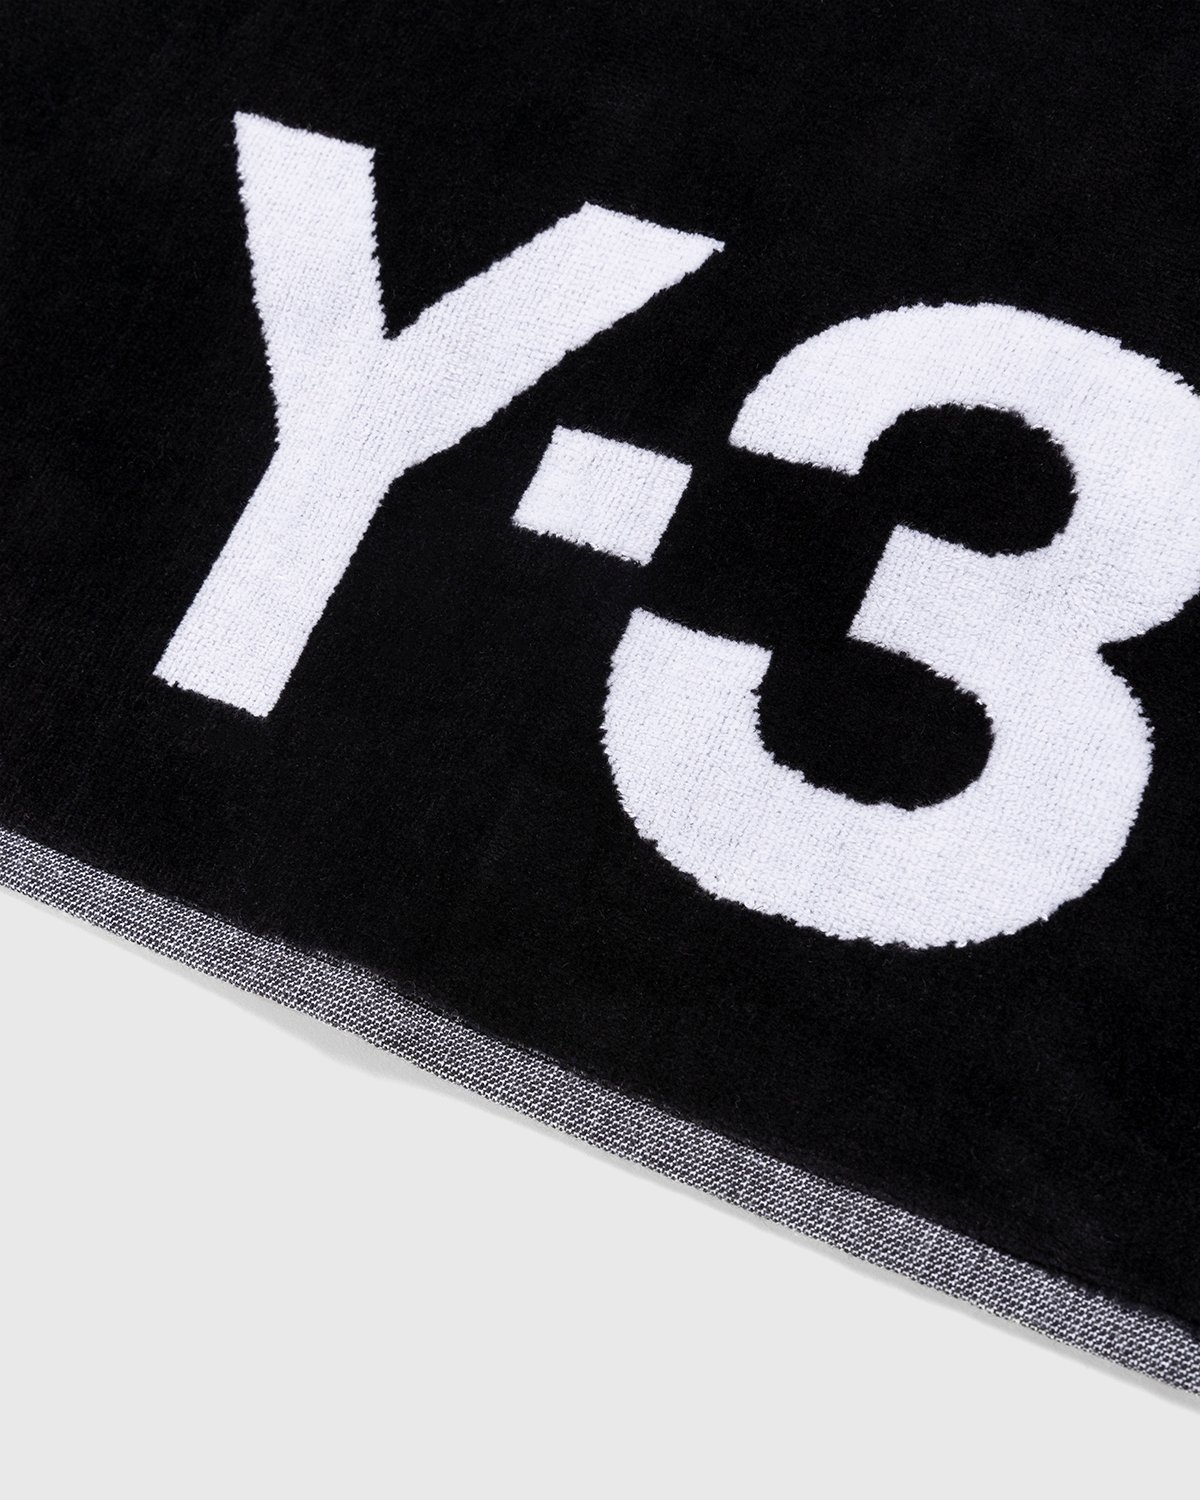 Y-3 - Logo Gym Towel Black/White - Lifestyle - Black - Image 3